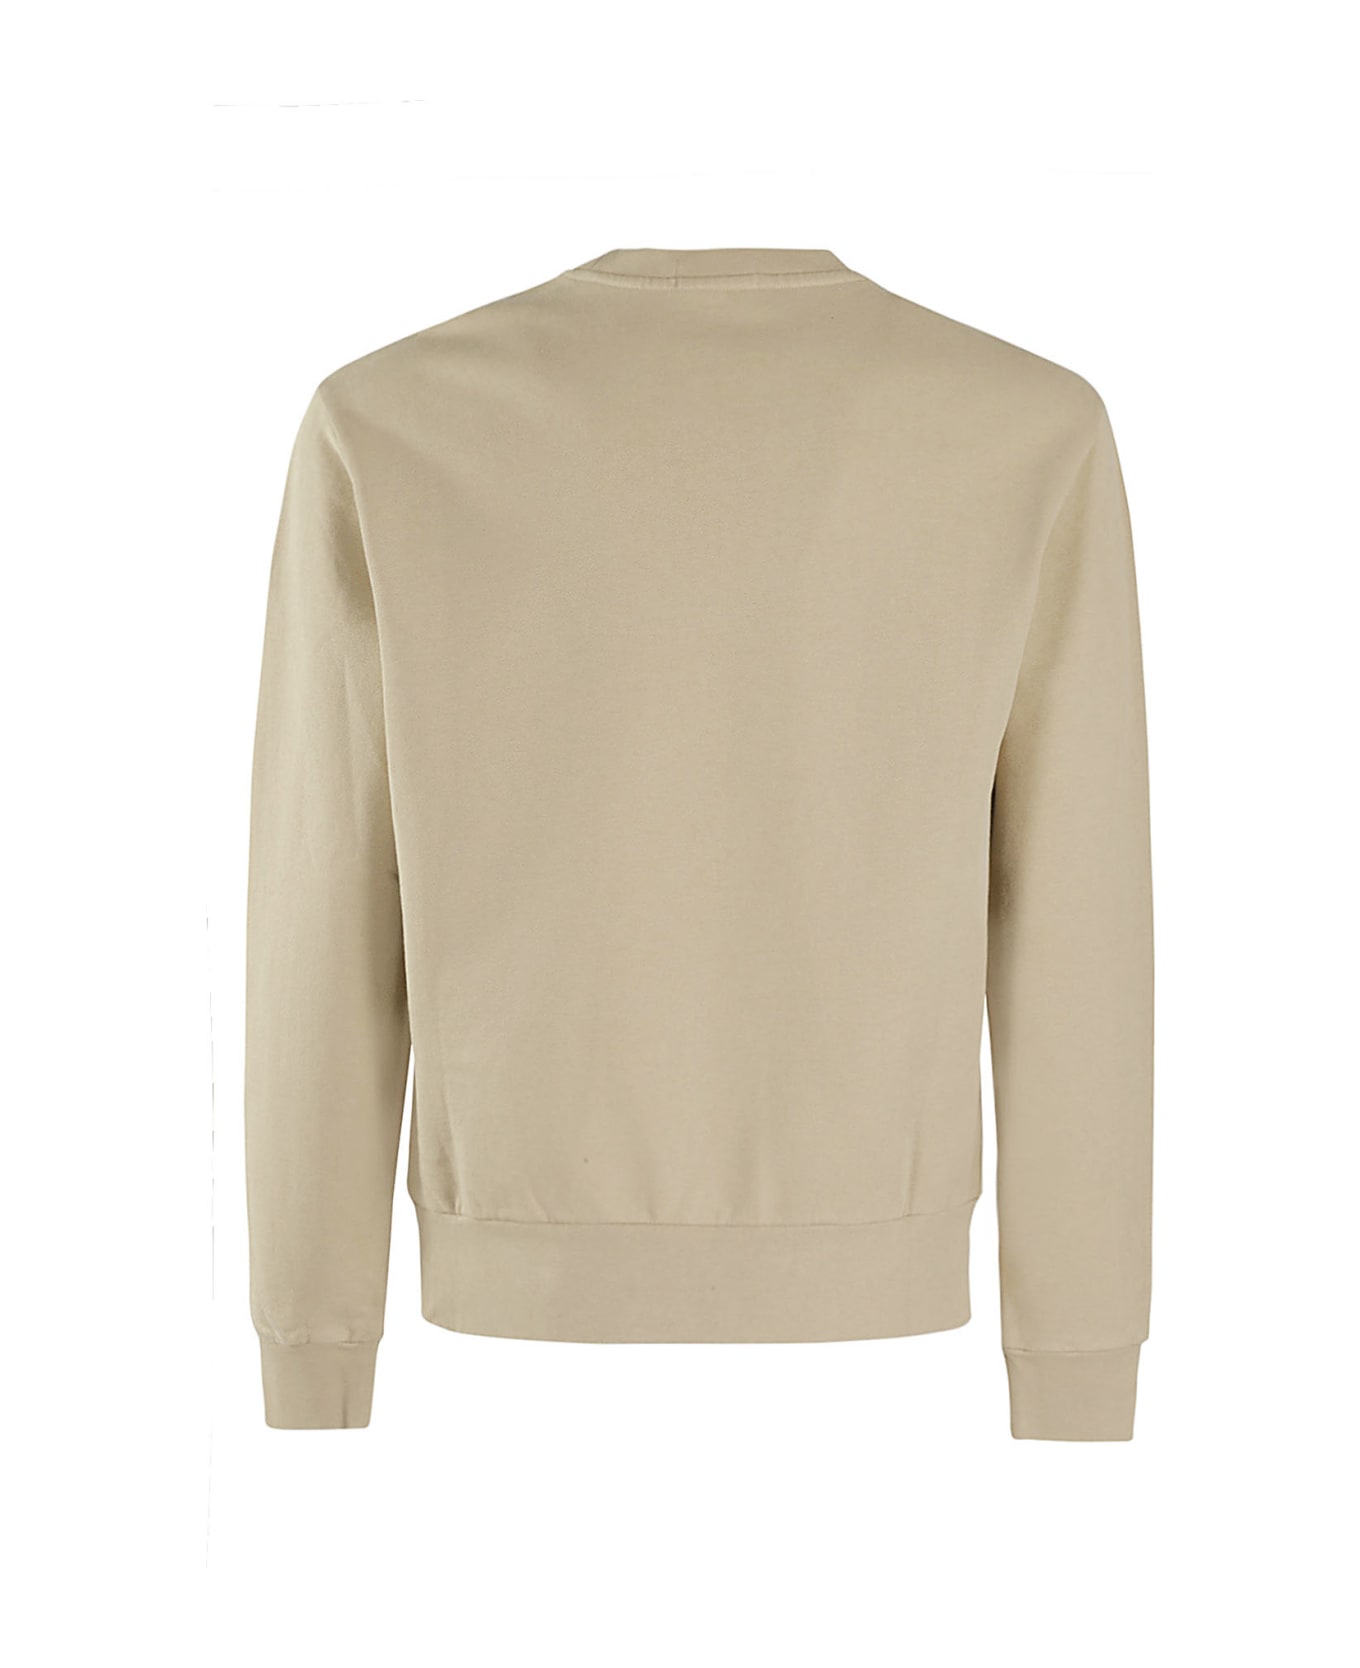 Polo Ralph Lauren Long Sleeve Sweatshirt - Coastal Beige フリース